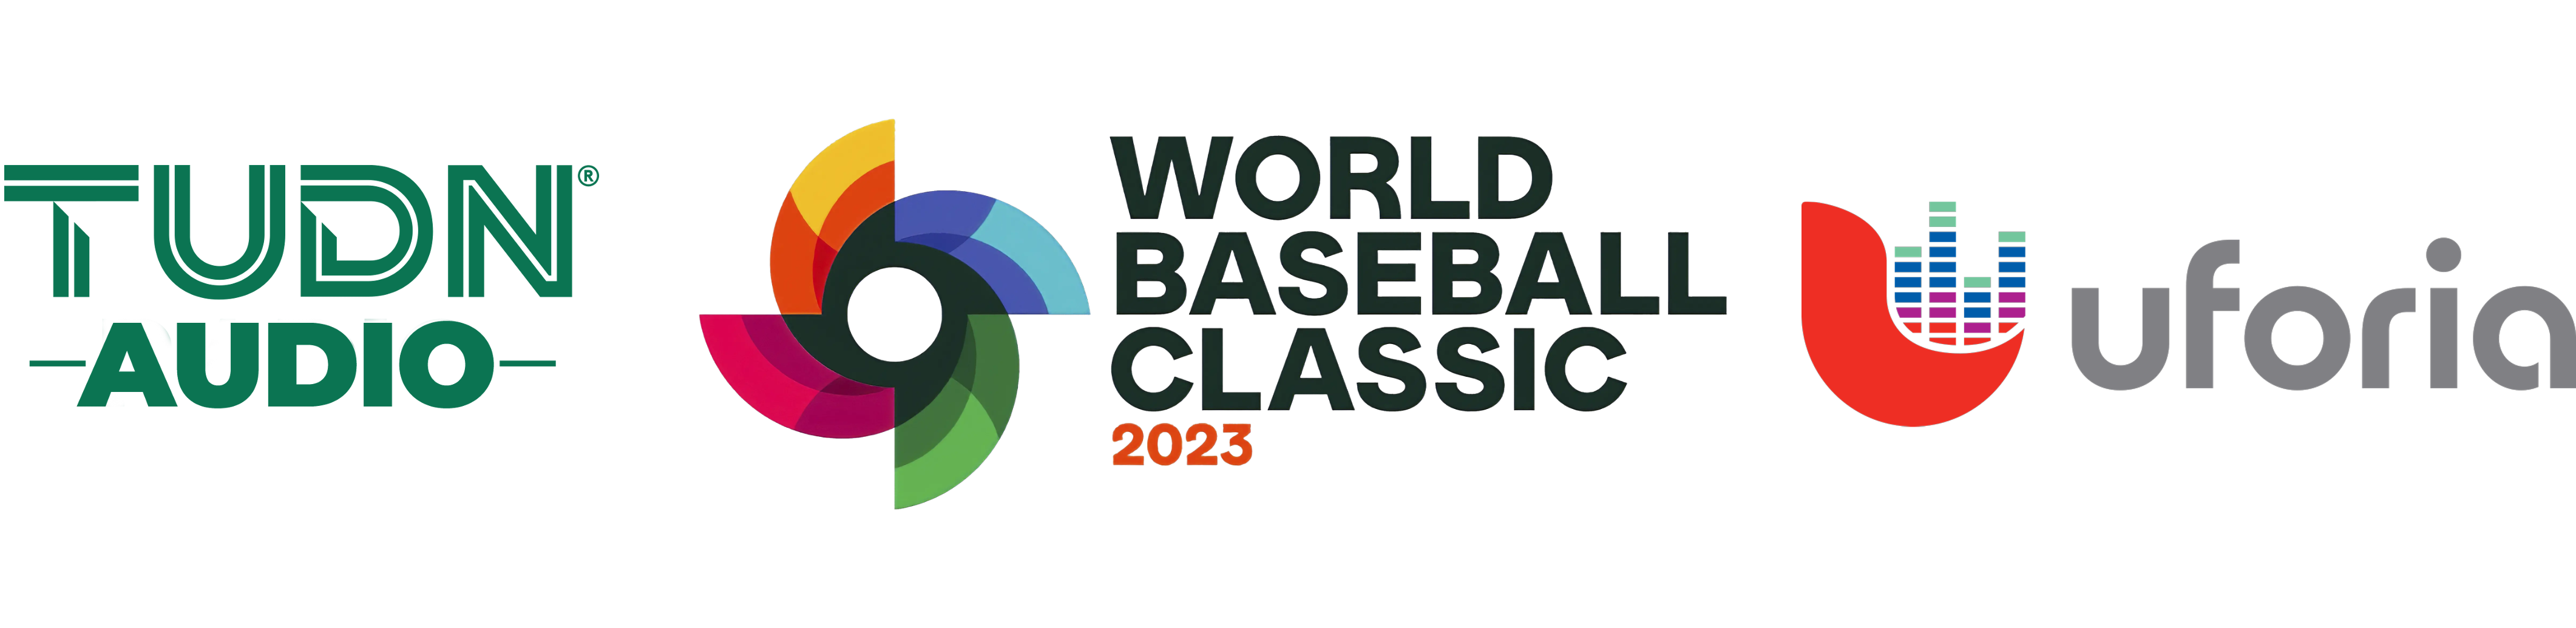 TUDN Audio Brings World Baseball Classic to Fans